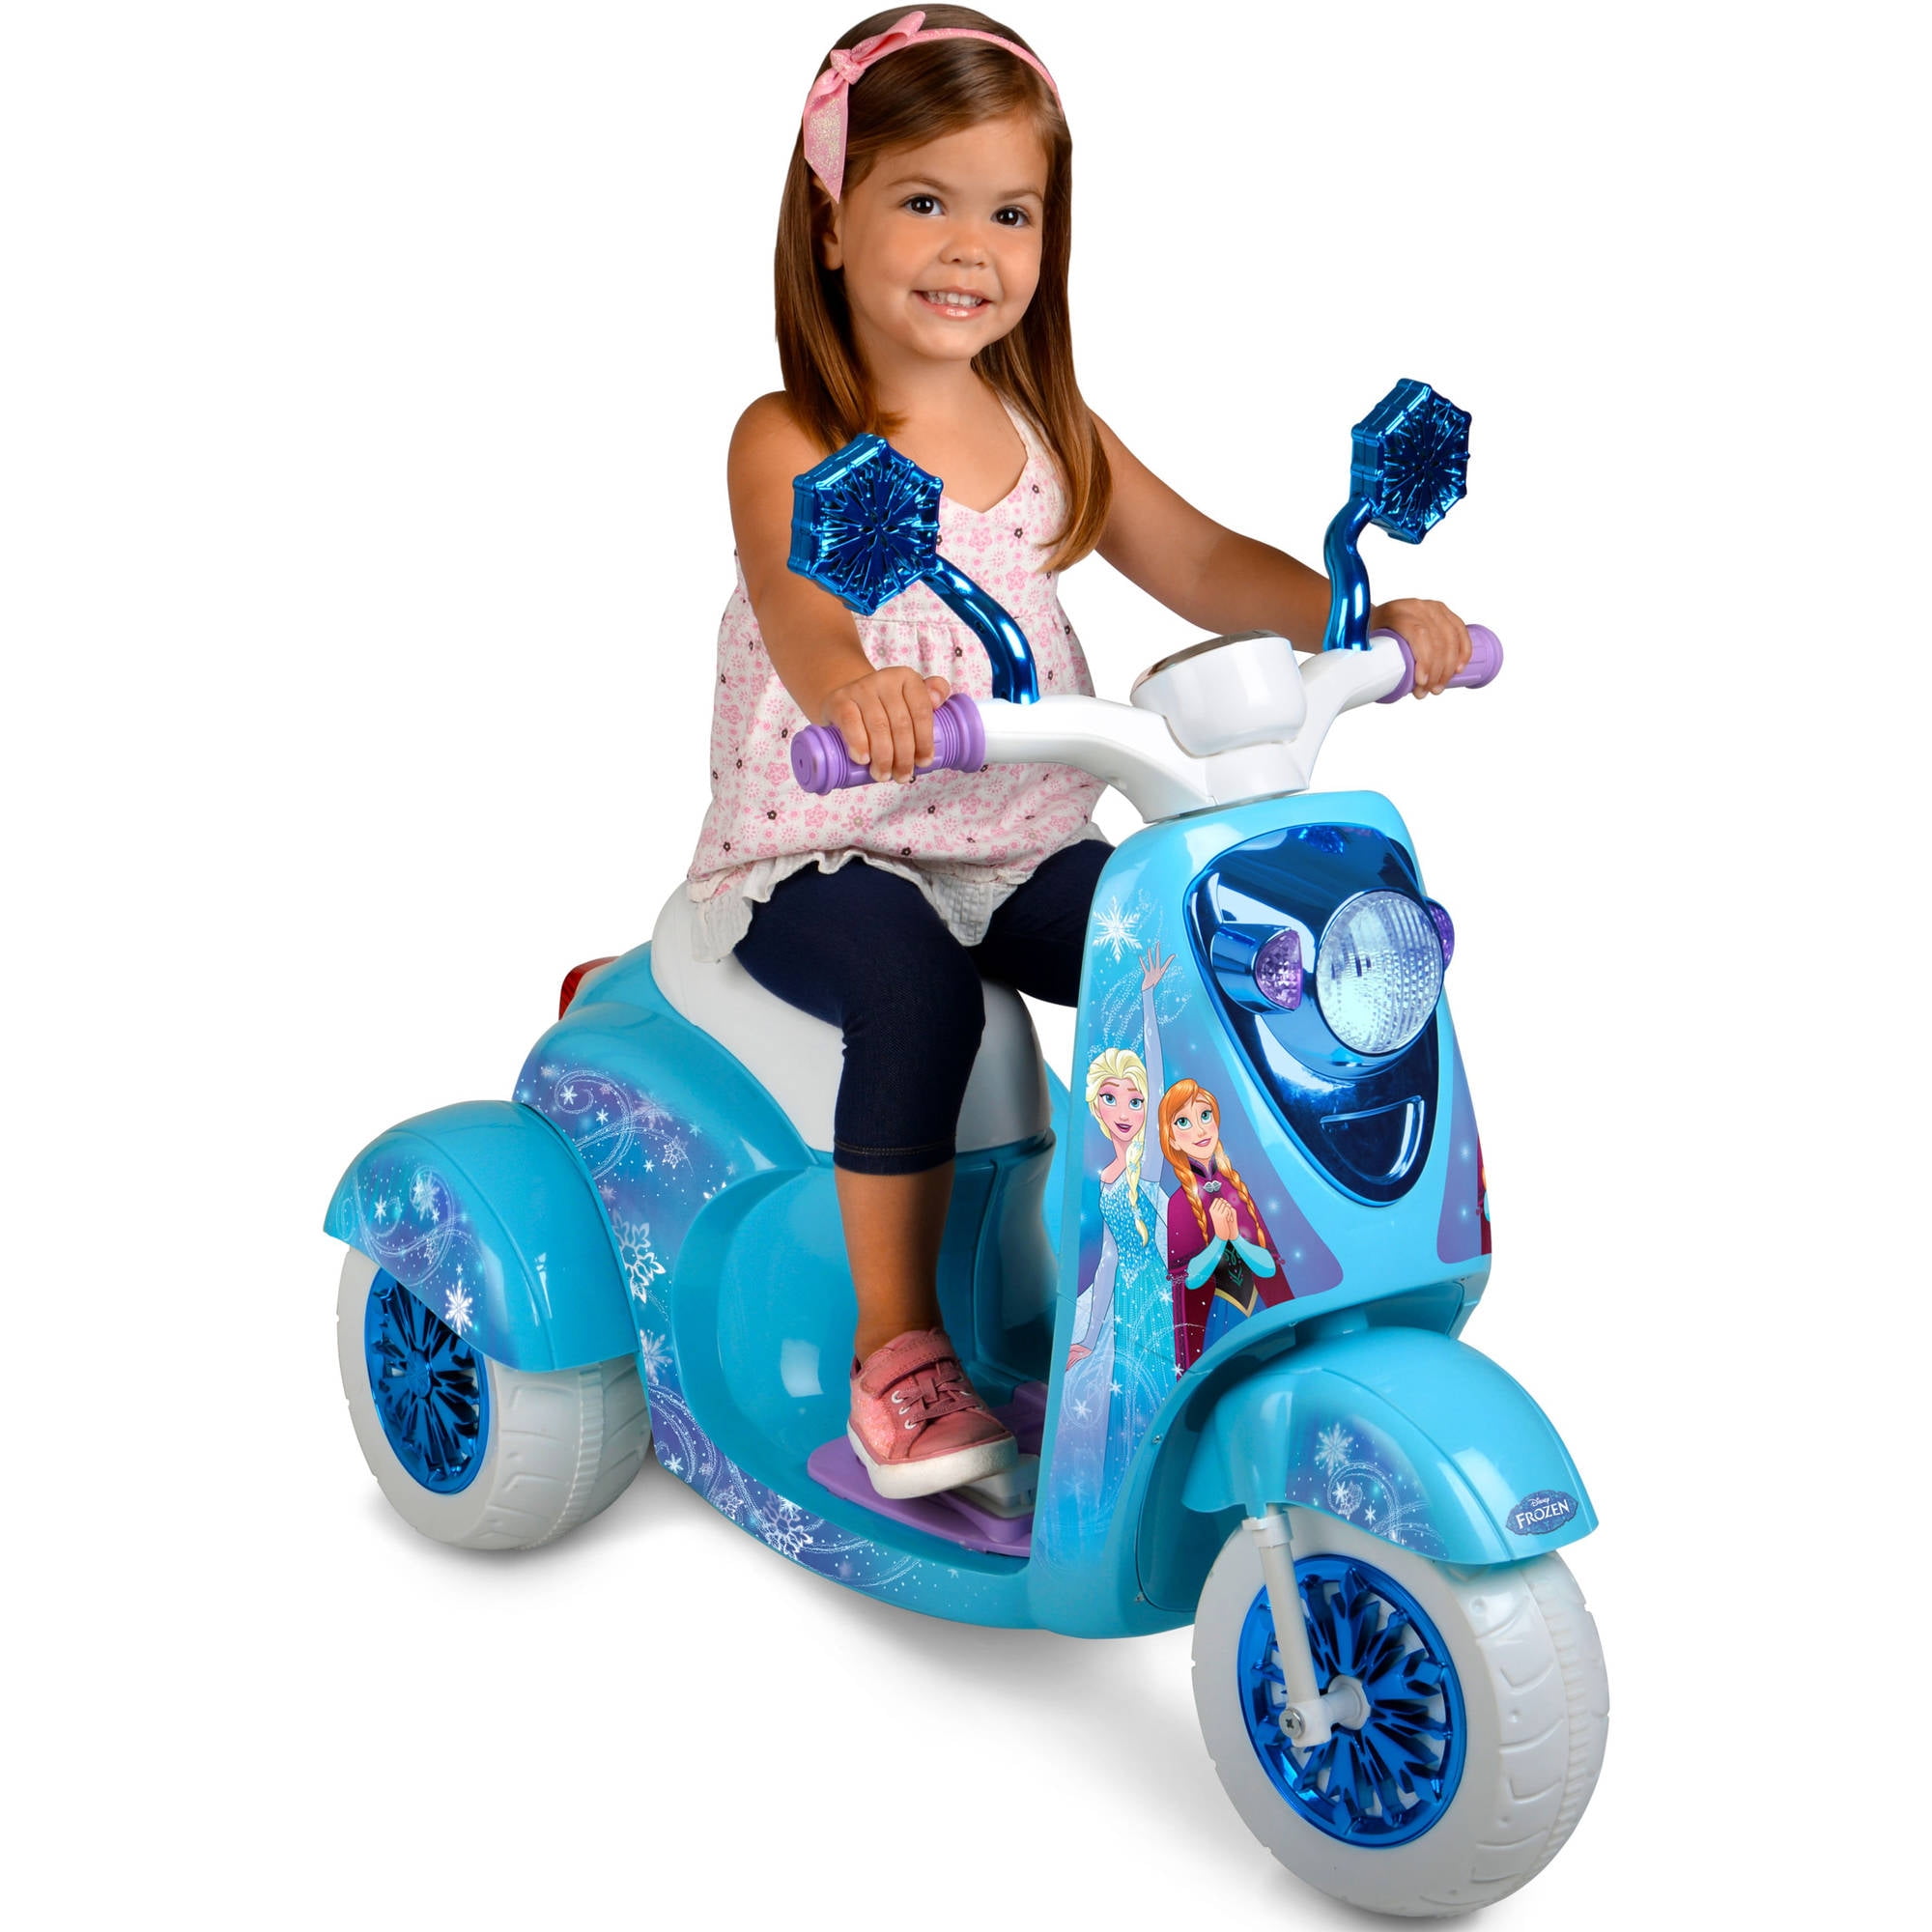 scooty bike for kids